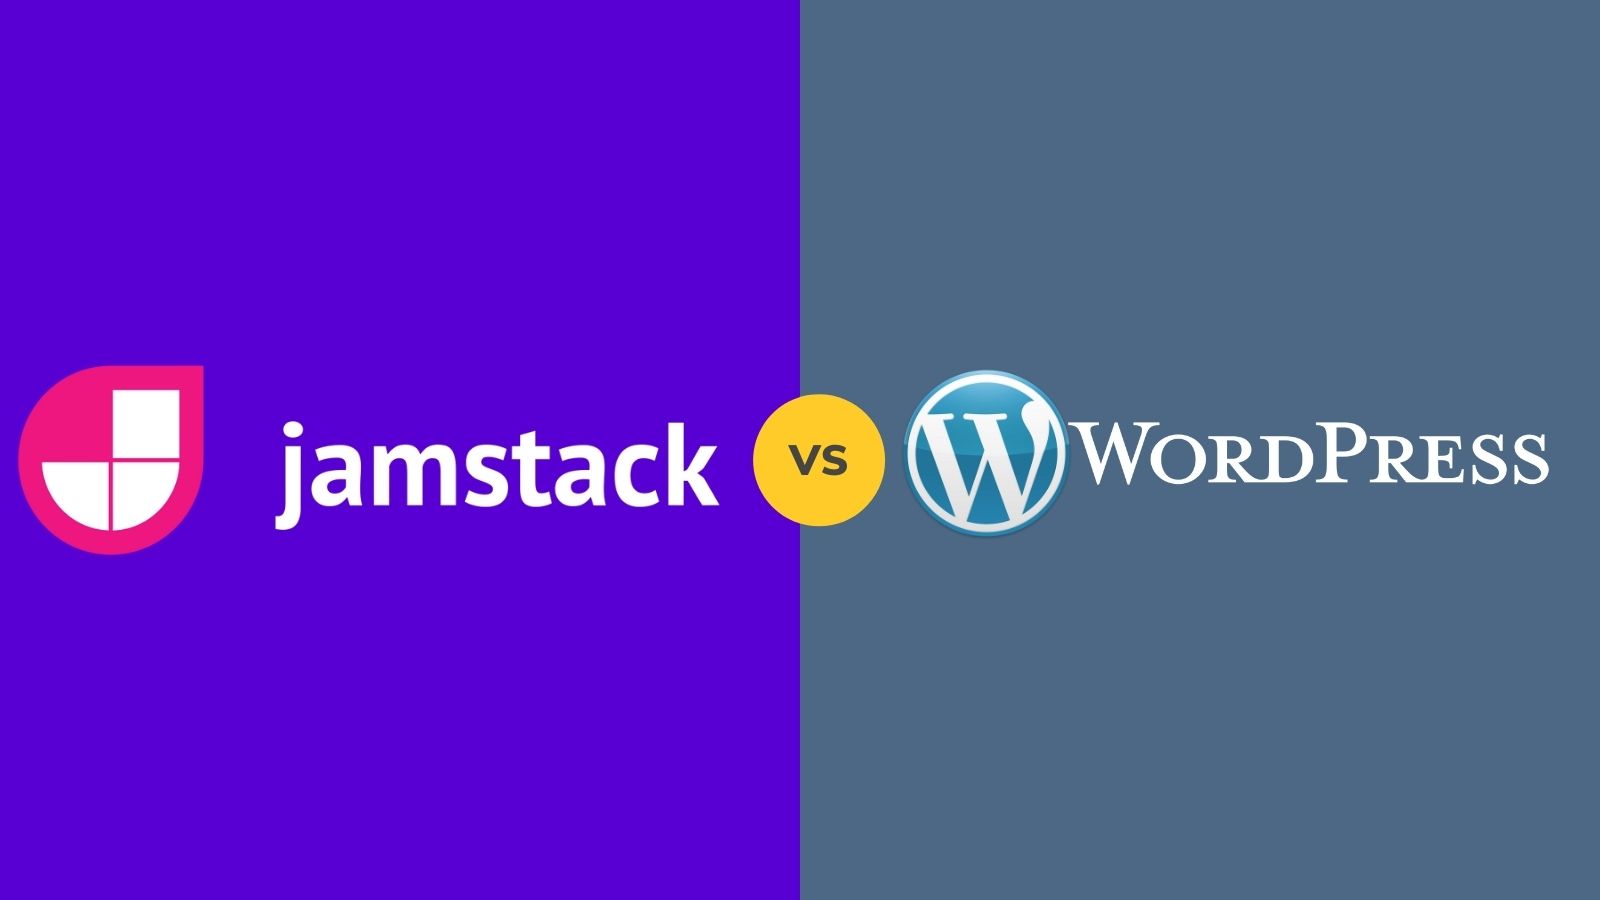 Jamstack vs WordPress cost effectiveness on agilitycms.com